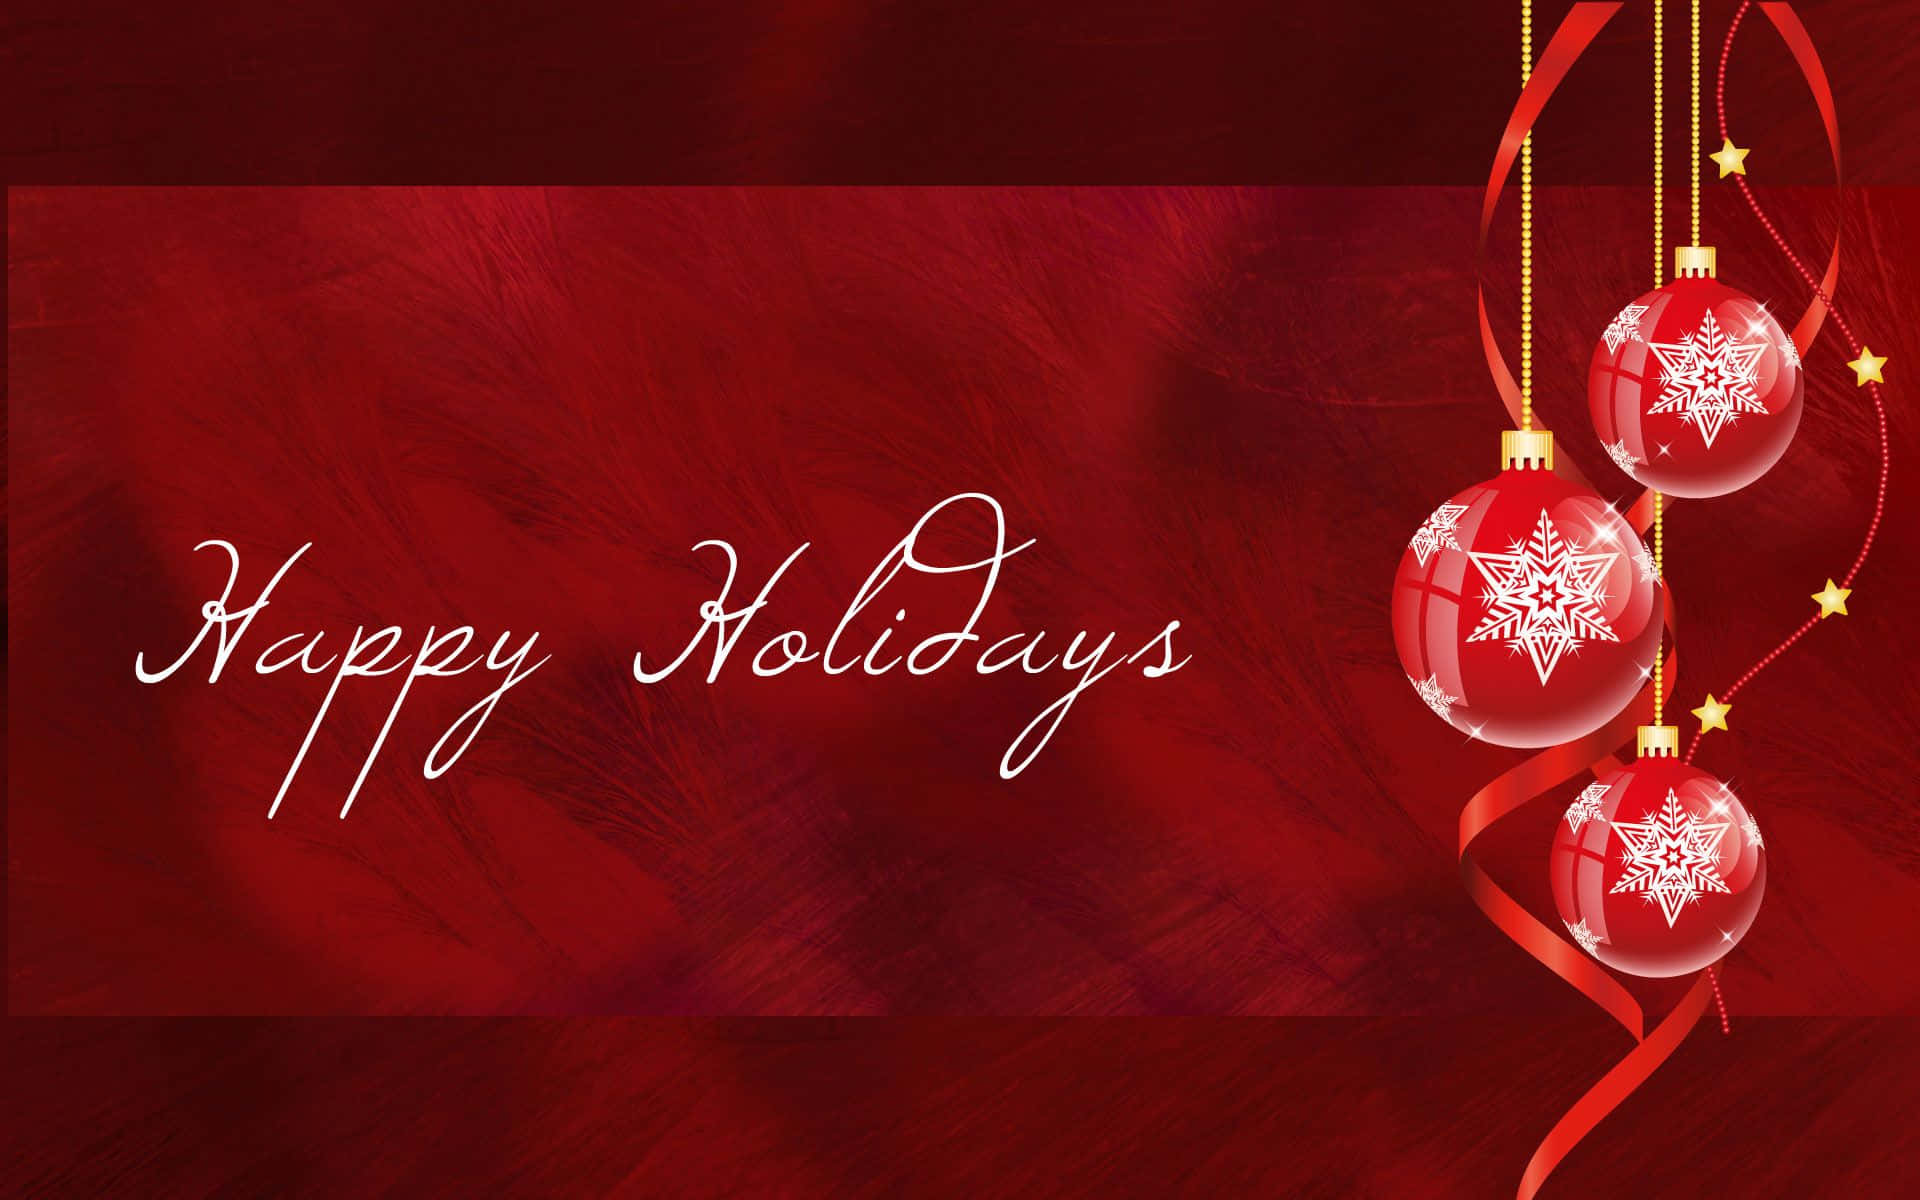 "festive Season Sparkle - Happy Holidays Background"